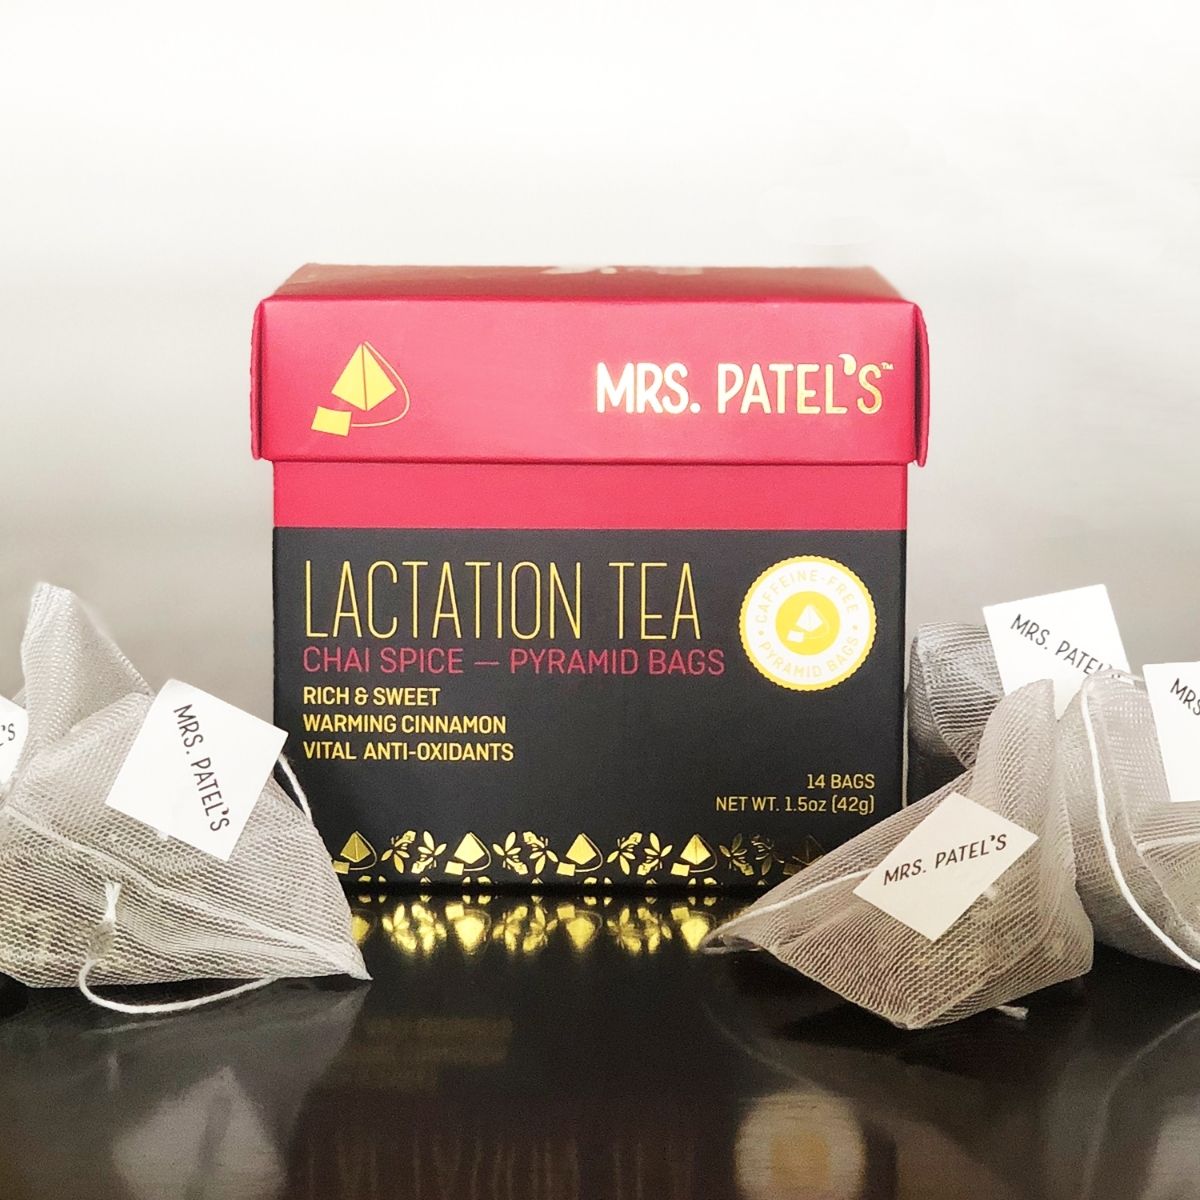 mrs patel's chai spice lactation tea box and tea bags